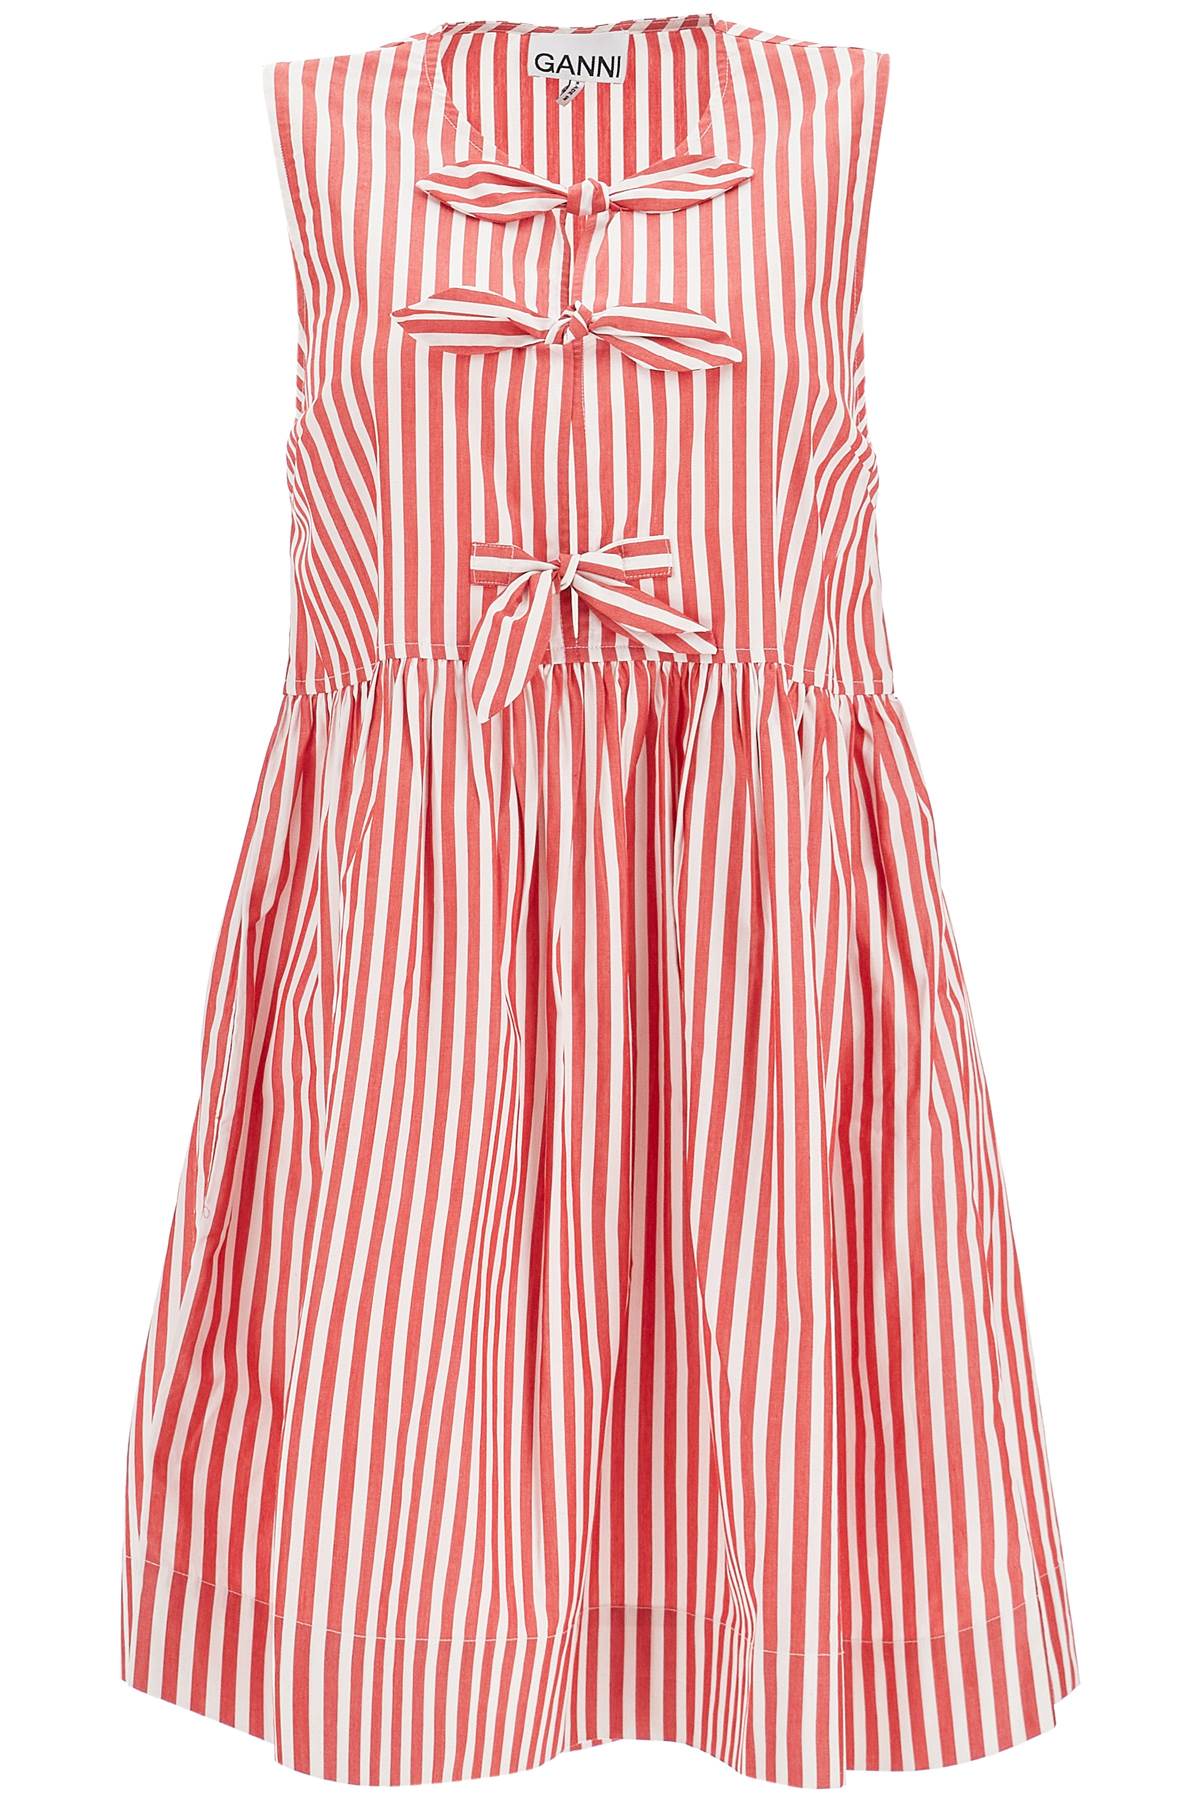 Ganni GANNI striped mini dress with bow accents